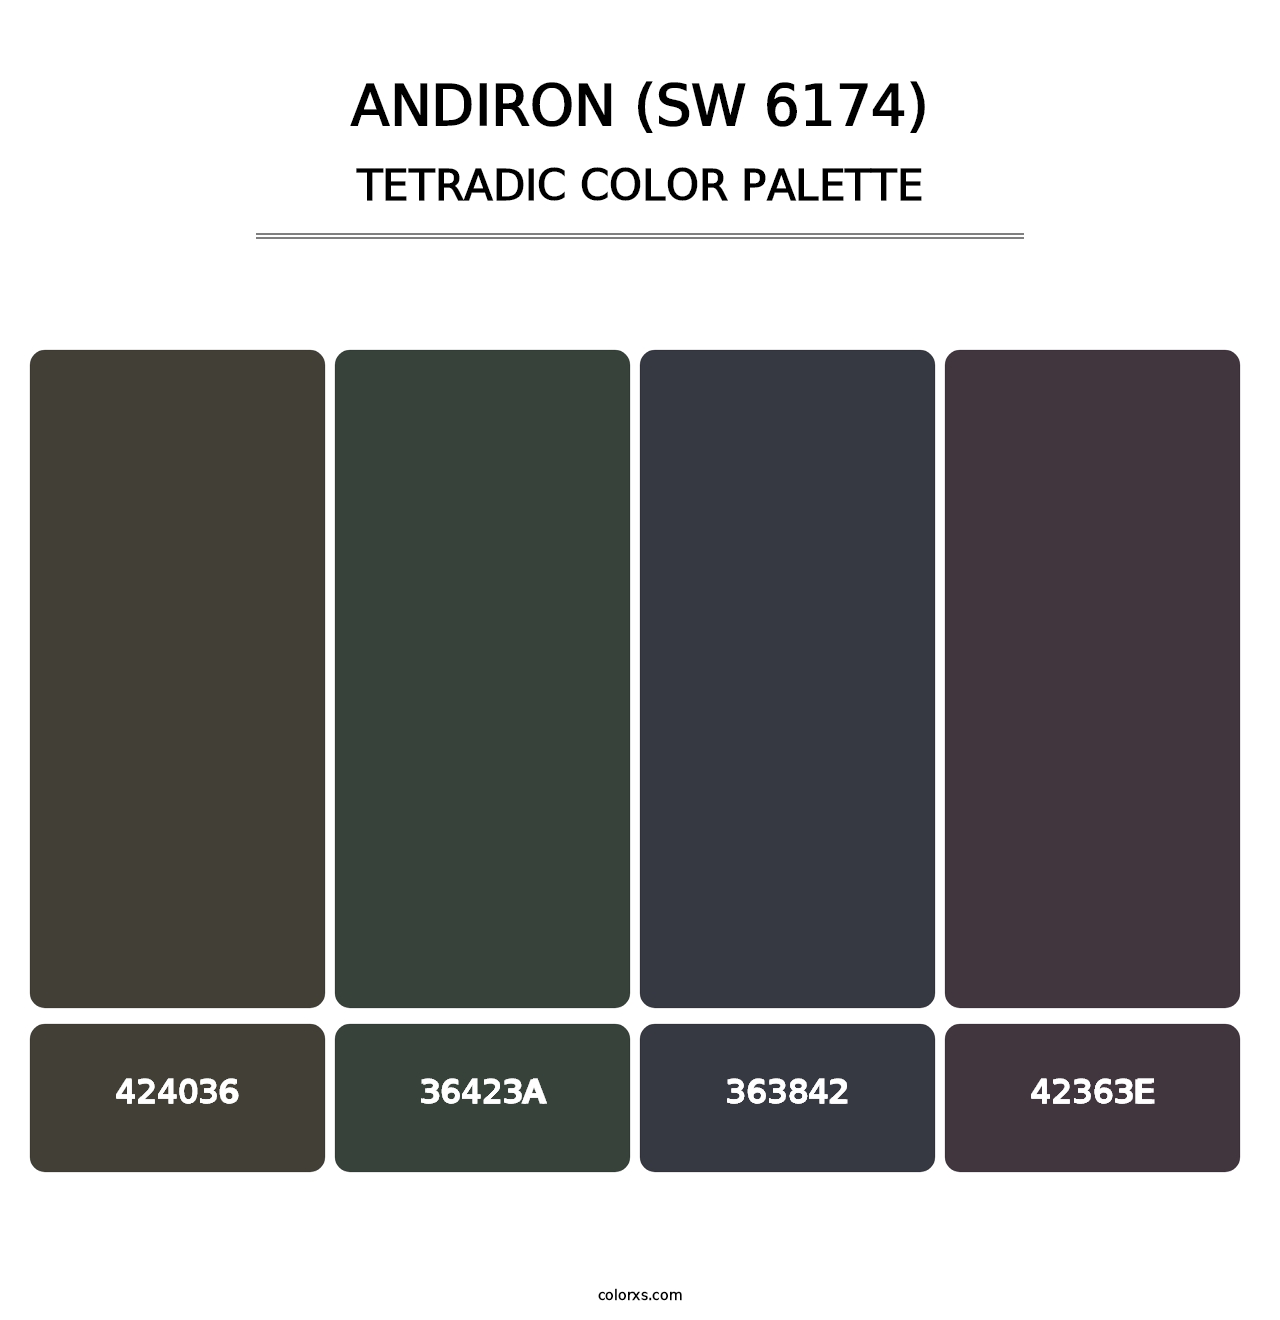 Andiron (SW 6174) - Tetradic Color Palette